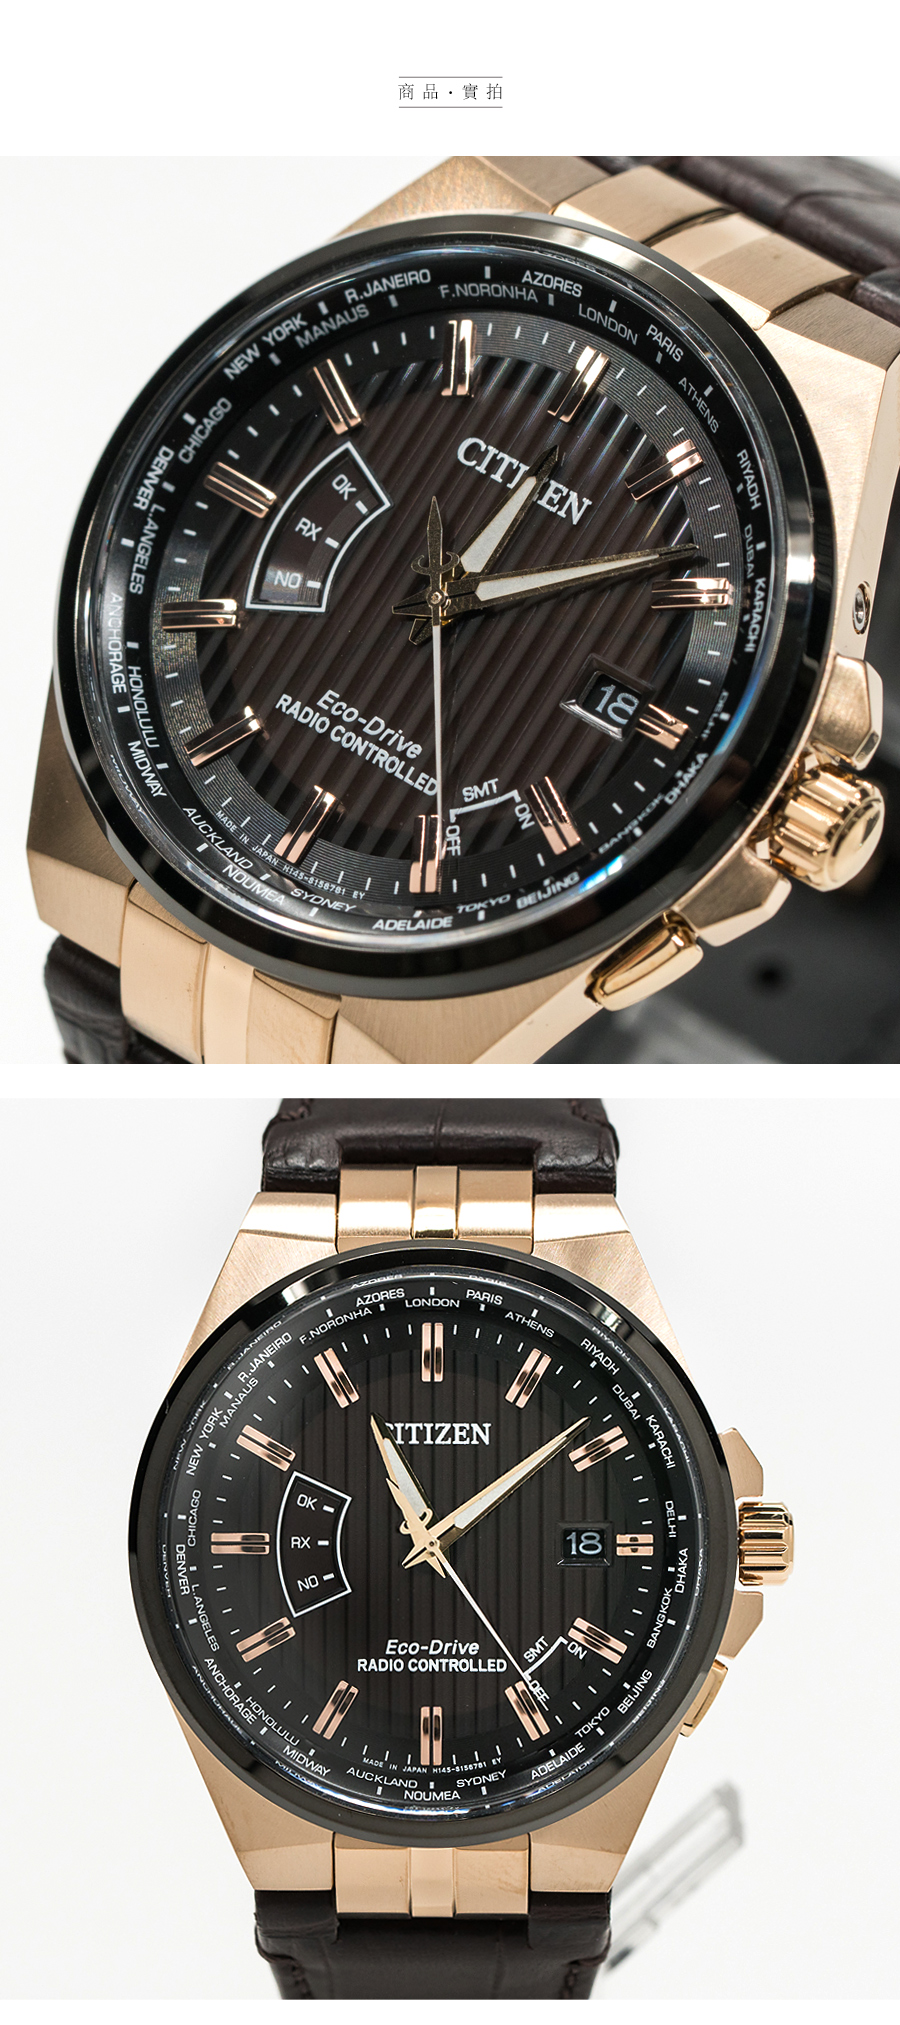 CITIZEN 星辰 Eco-Drive 限量 褐色宇宙電波對時光動能腕錶 CB0164-17E 熱賣中!